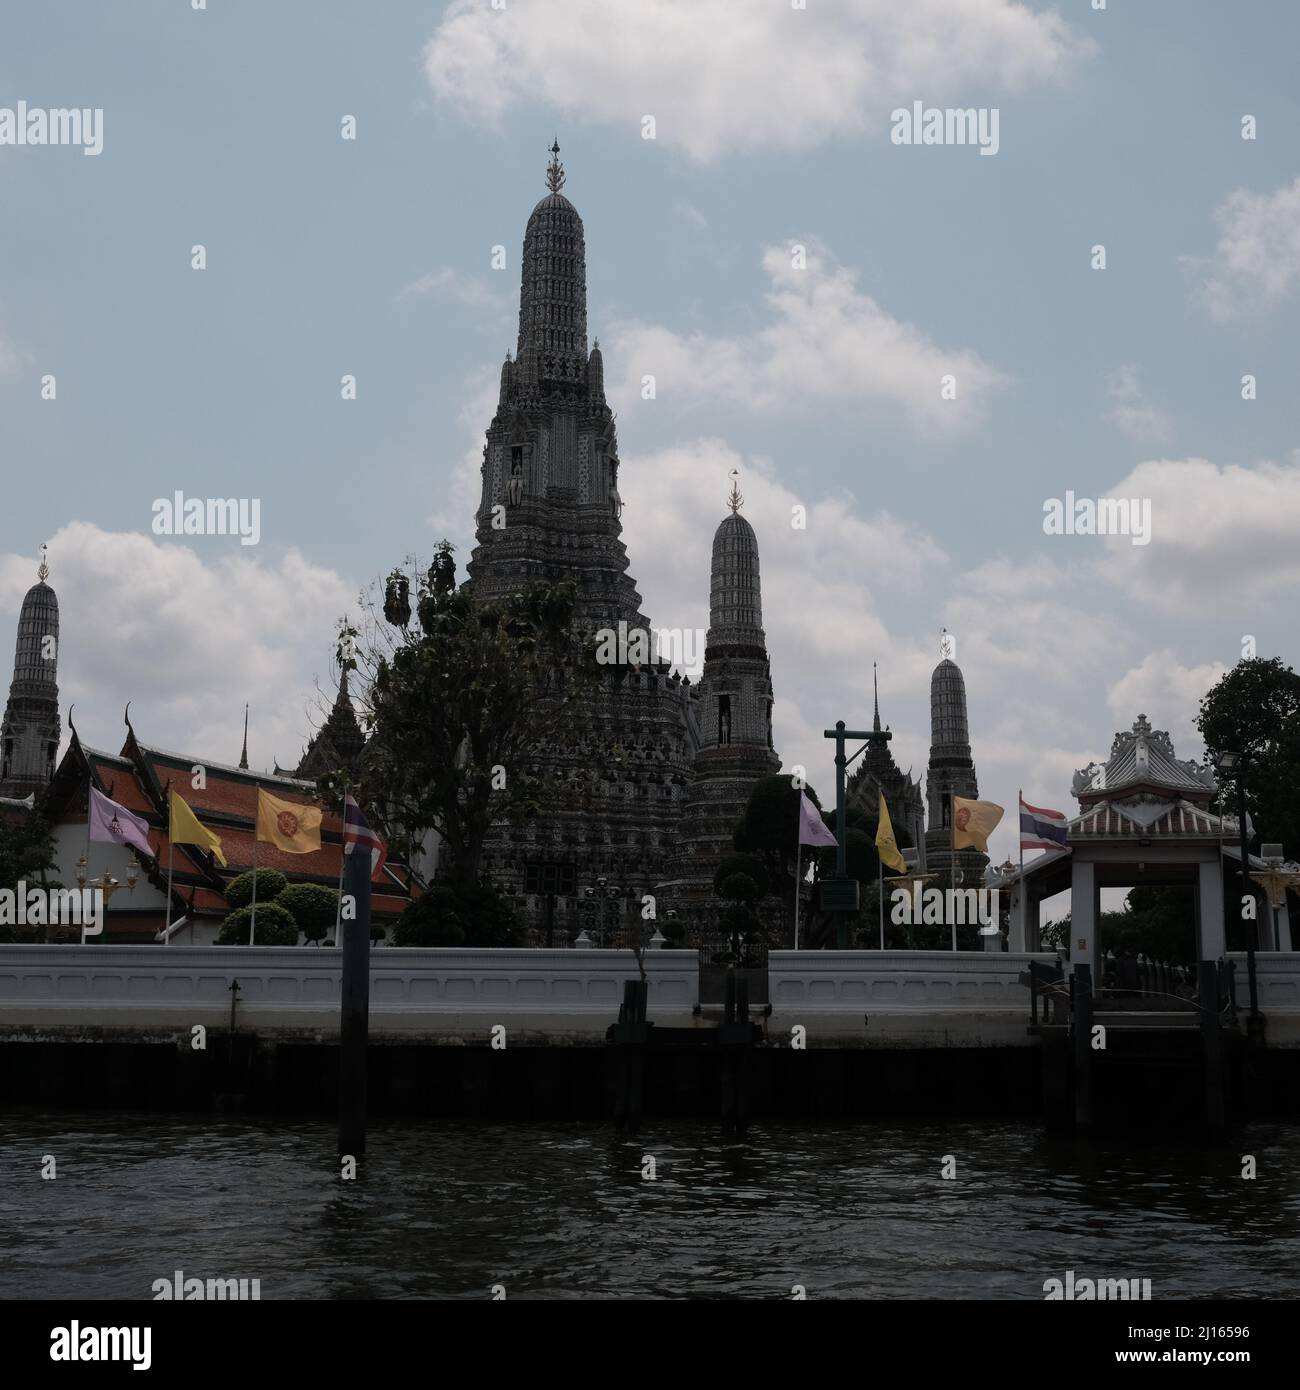 Templo budista del amanecer aka Wat Arun Ratchawaram Ratchawaramahawihan aka Wat Arun en el río Chao Phraya Bangkok Tailandia Foto de stock